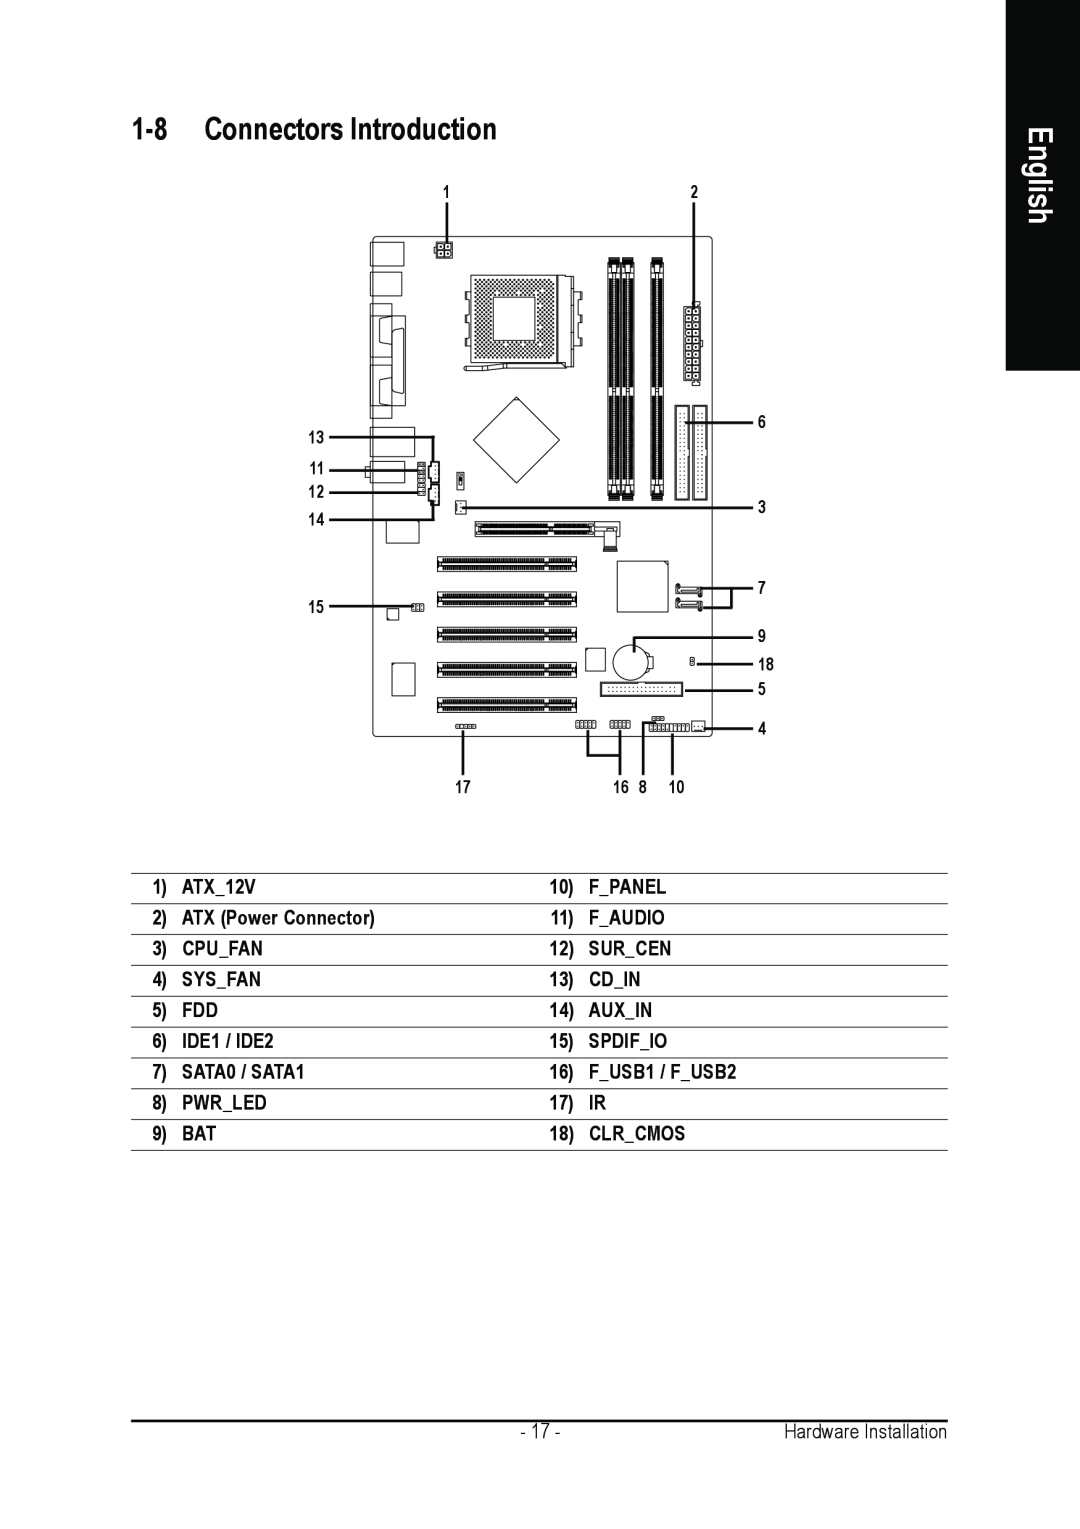 Gigabyte GA-7N400S-L user manual Connectors Introduction, English 